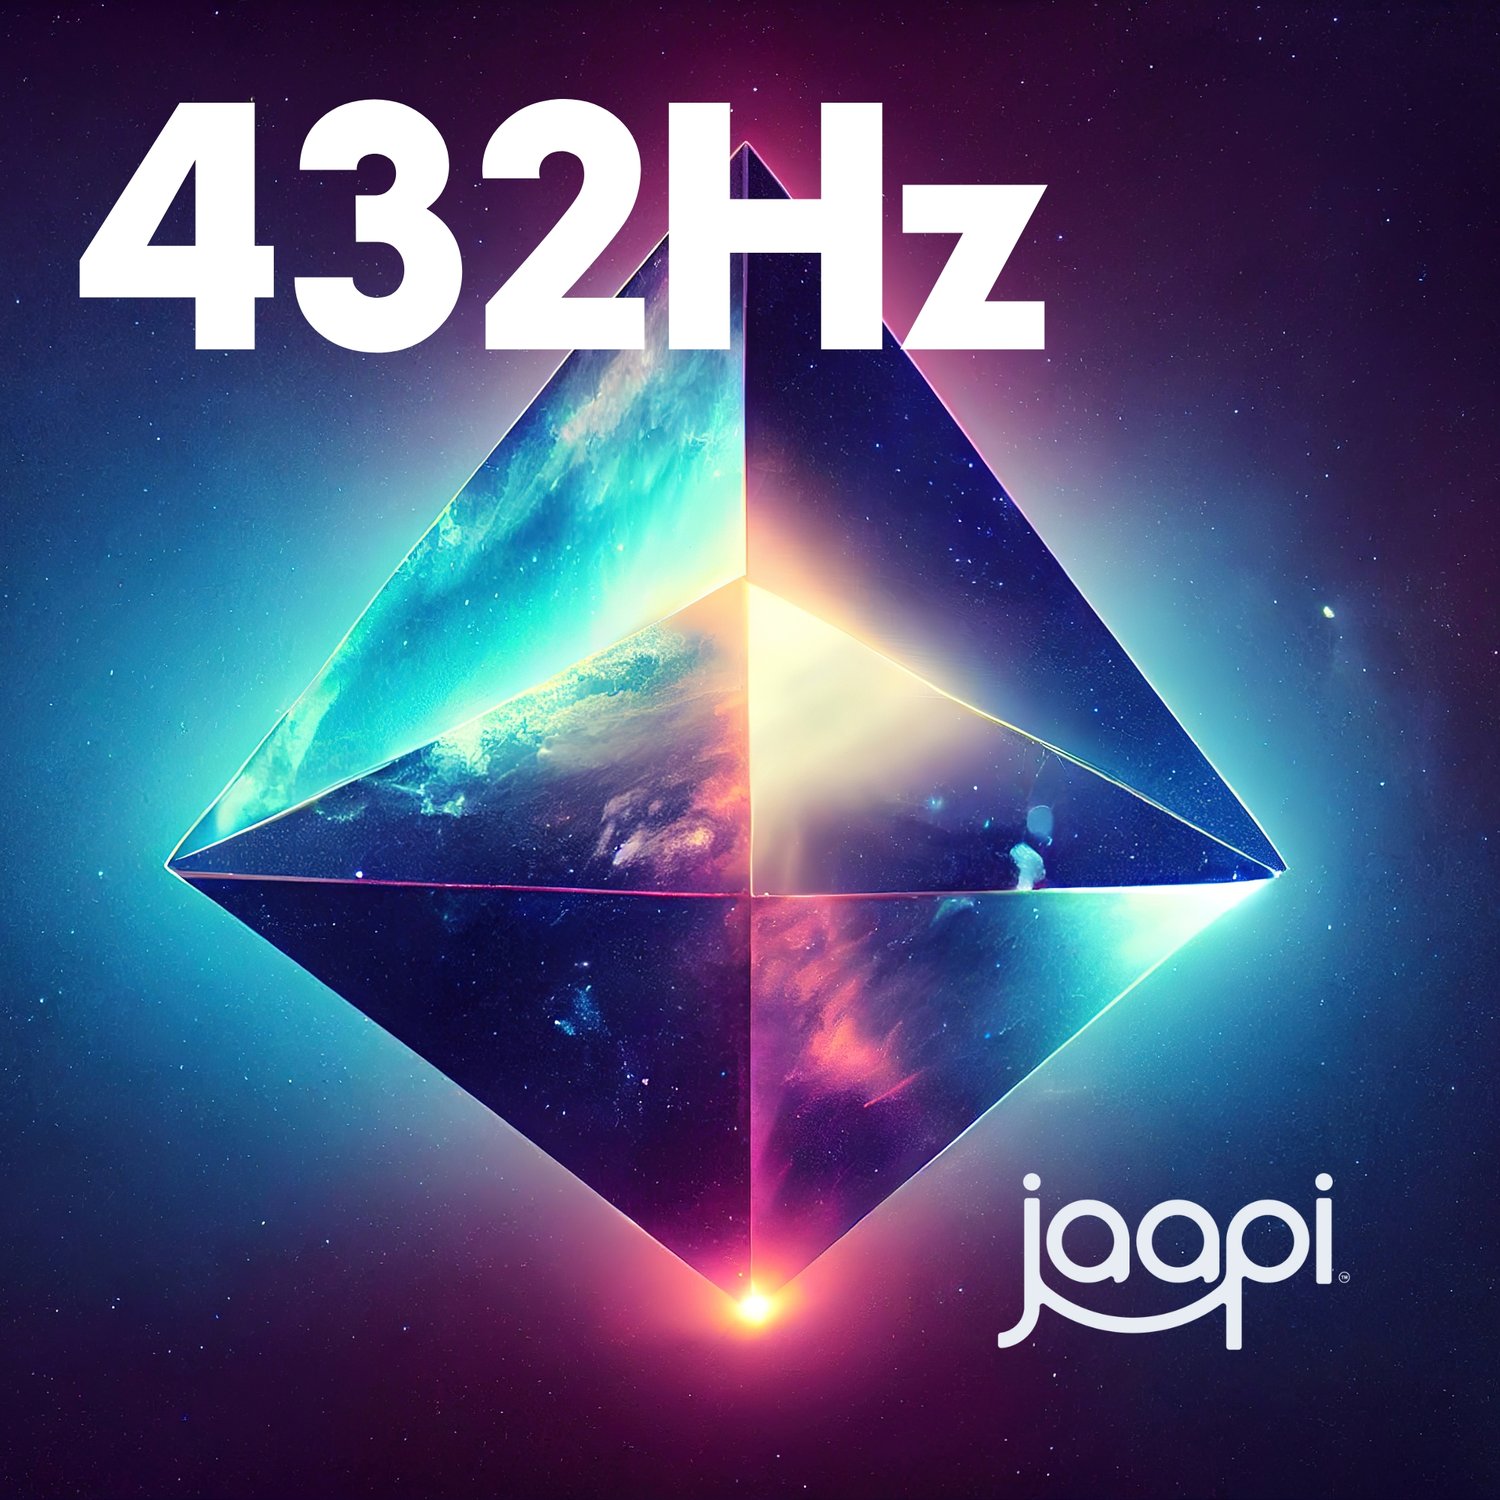 Spotify Playlist_432 Hz: A gateway to inner peace